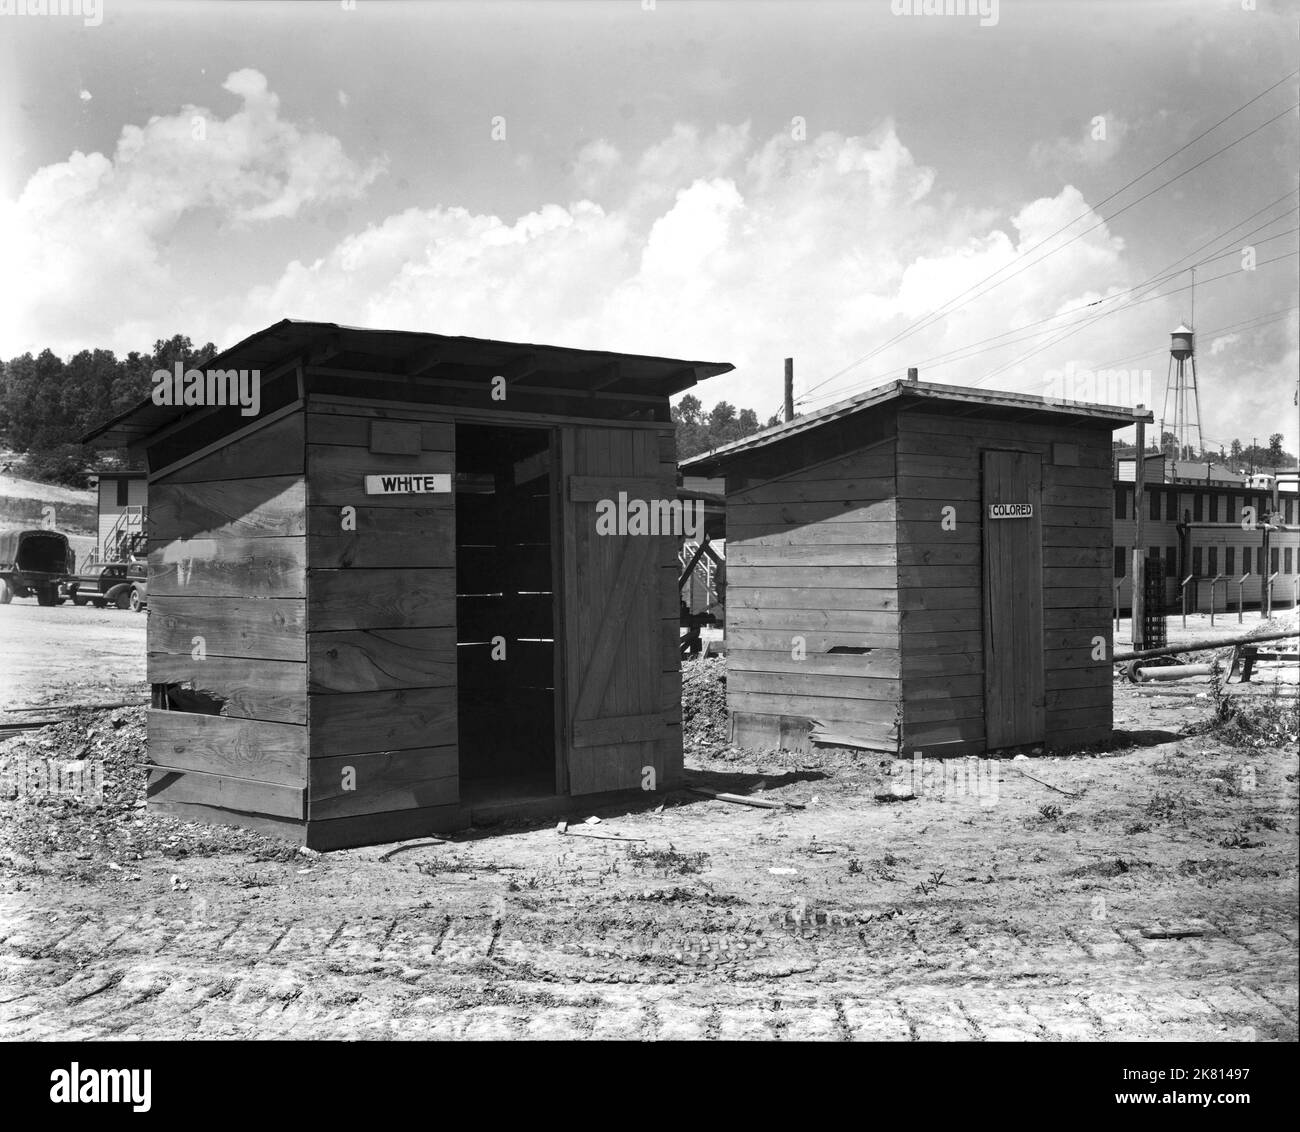 Ed Westcott / Department of Energy Oak Ridge - fotografia etichettata privie bianche e colorate X-10 Plant - 1943 Foto Stock